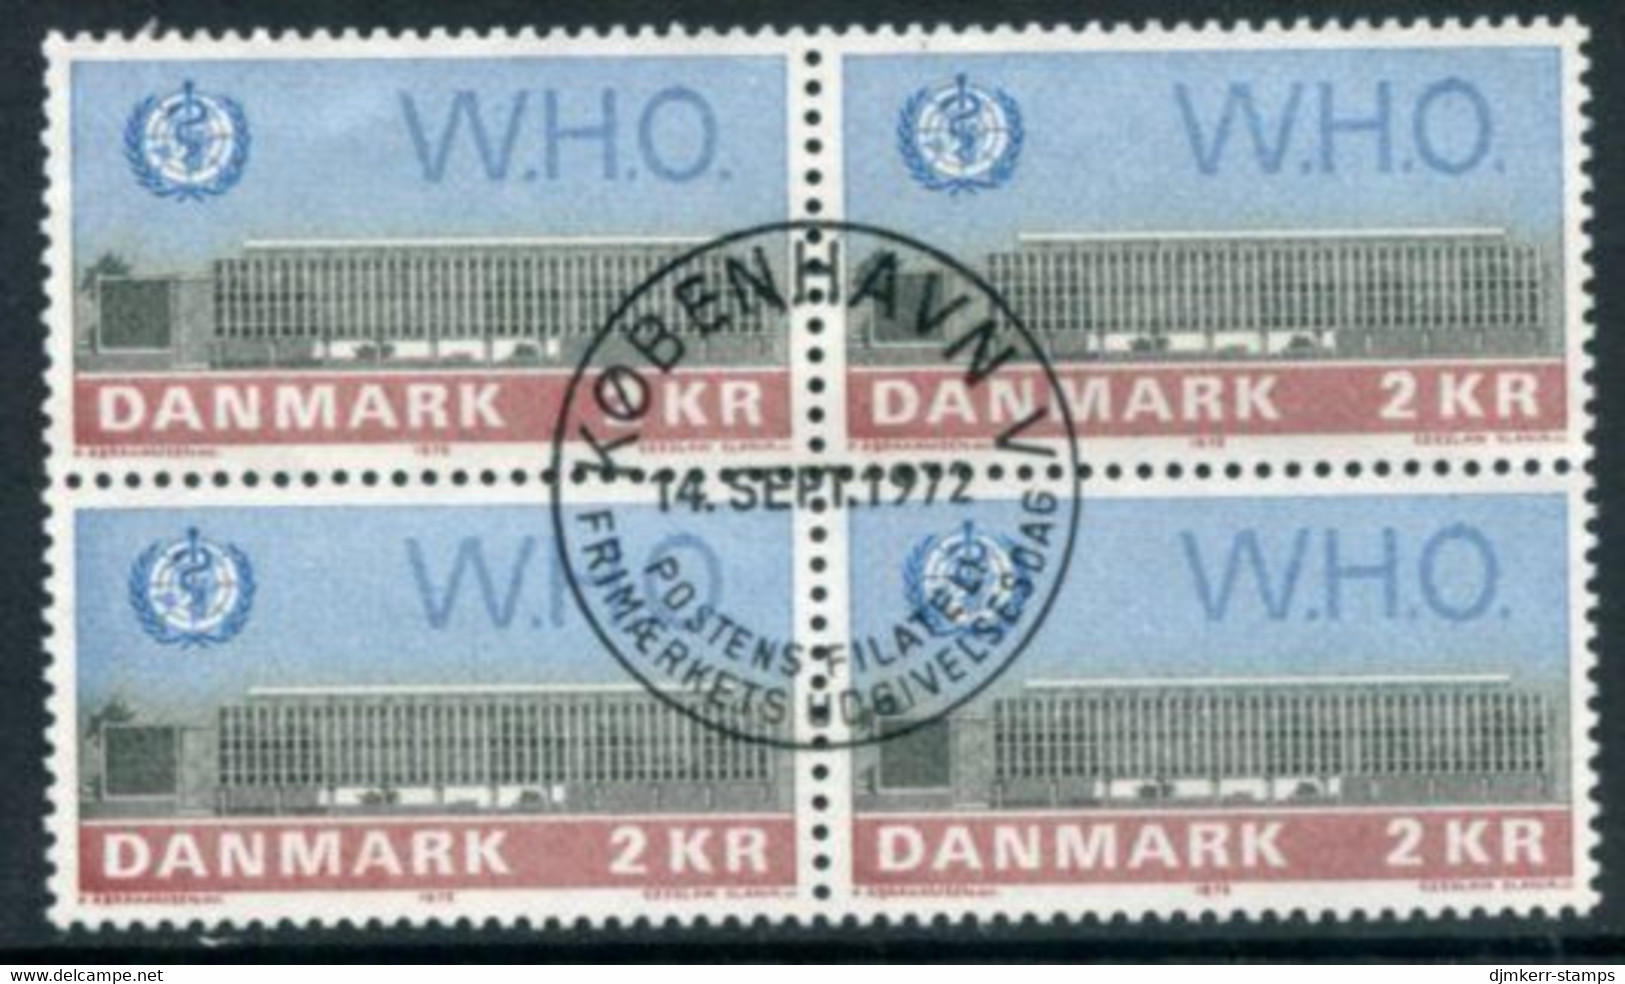 DENMARK 1972 WHO Headquarters. Block Of 4 Used   Michel 531 - Gebraucht